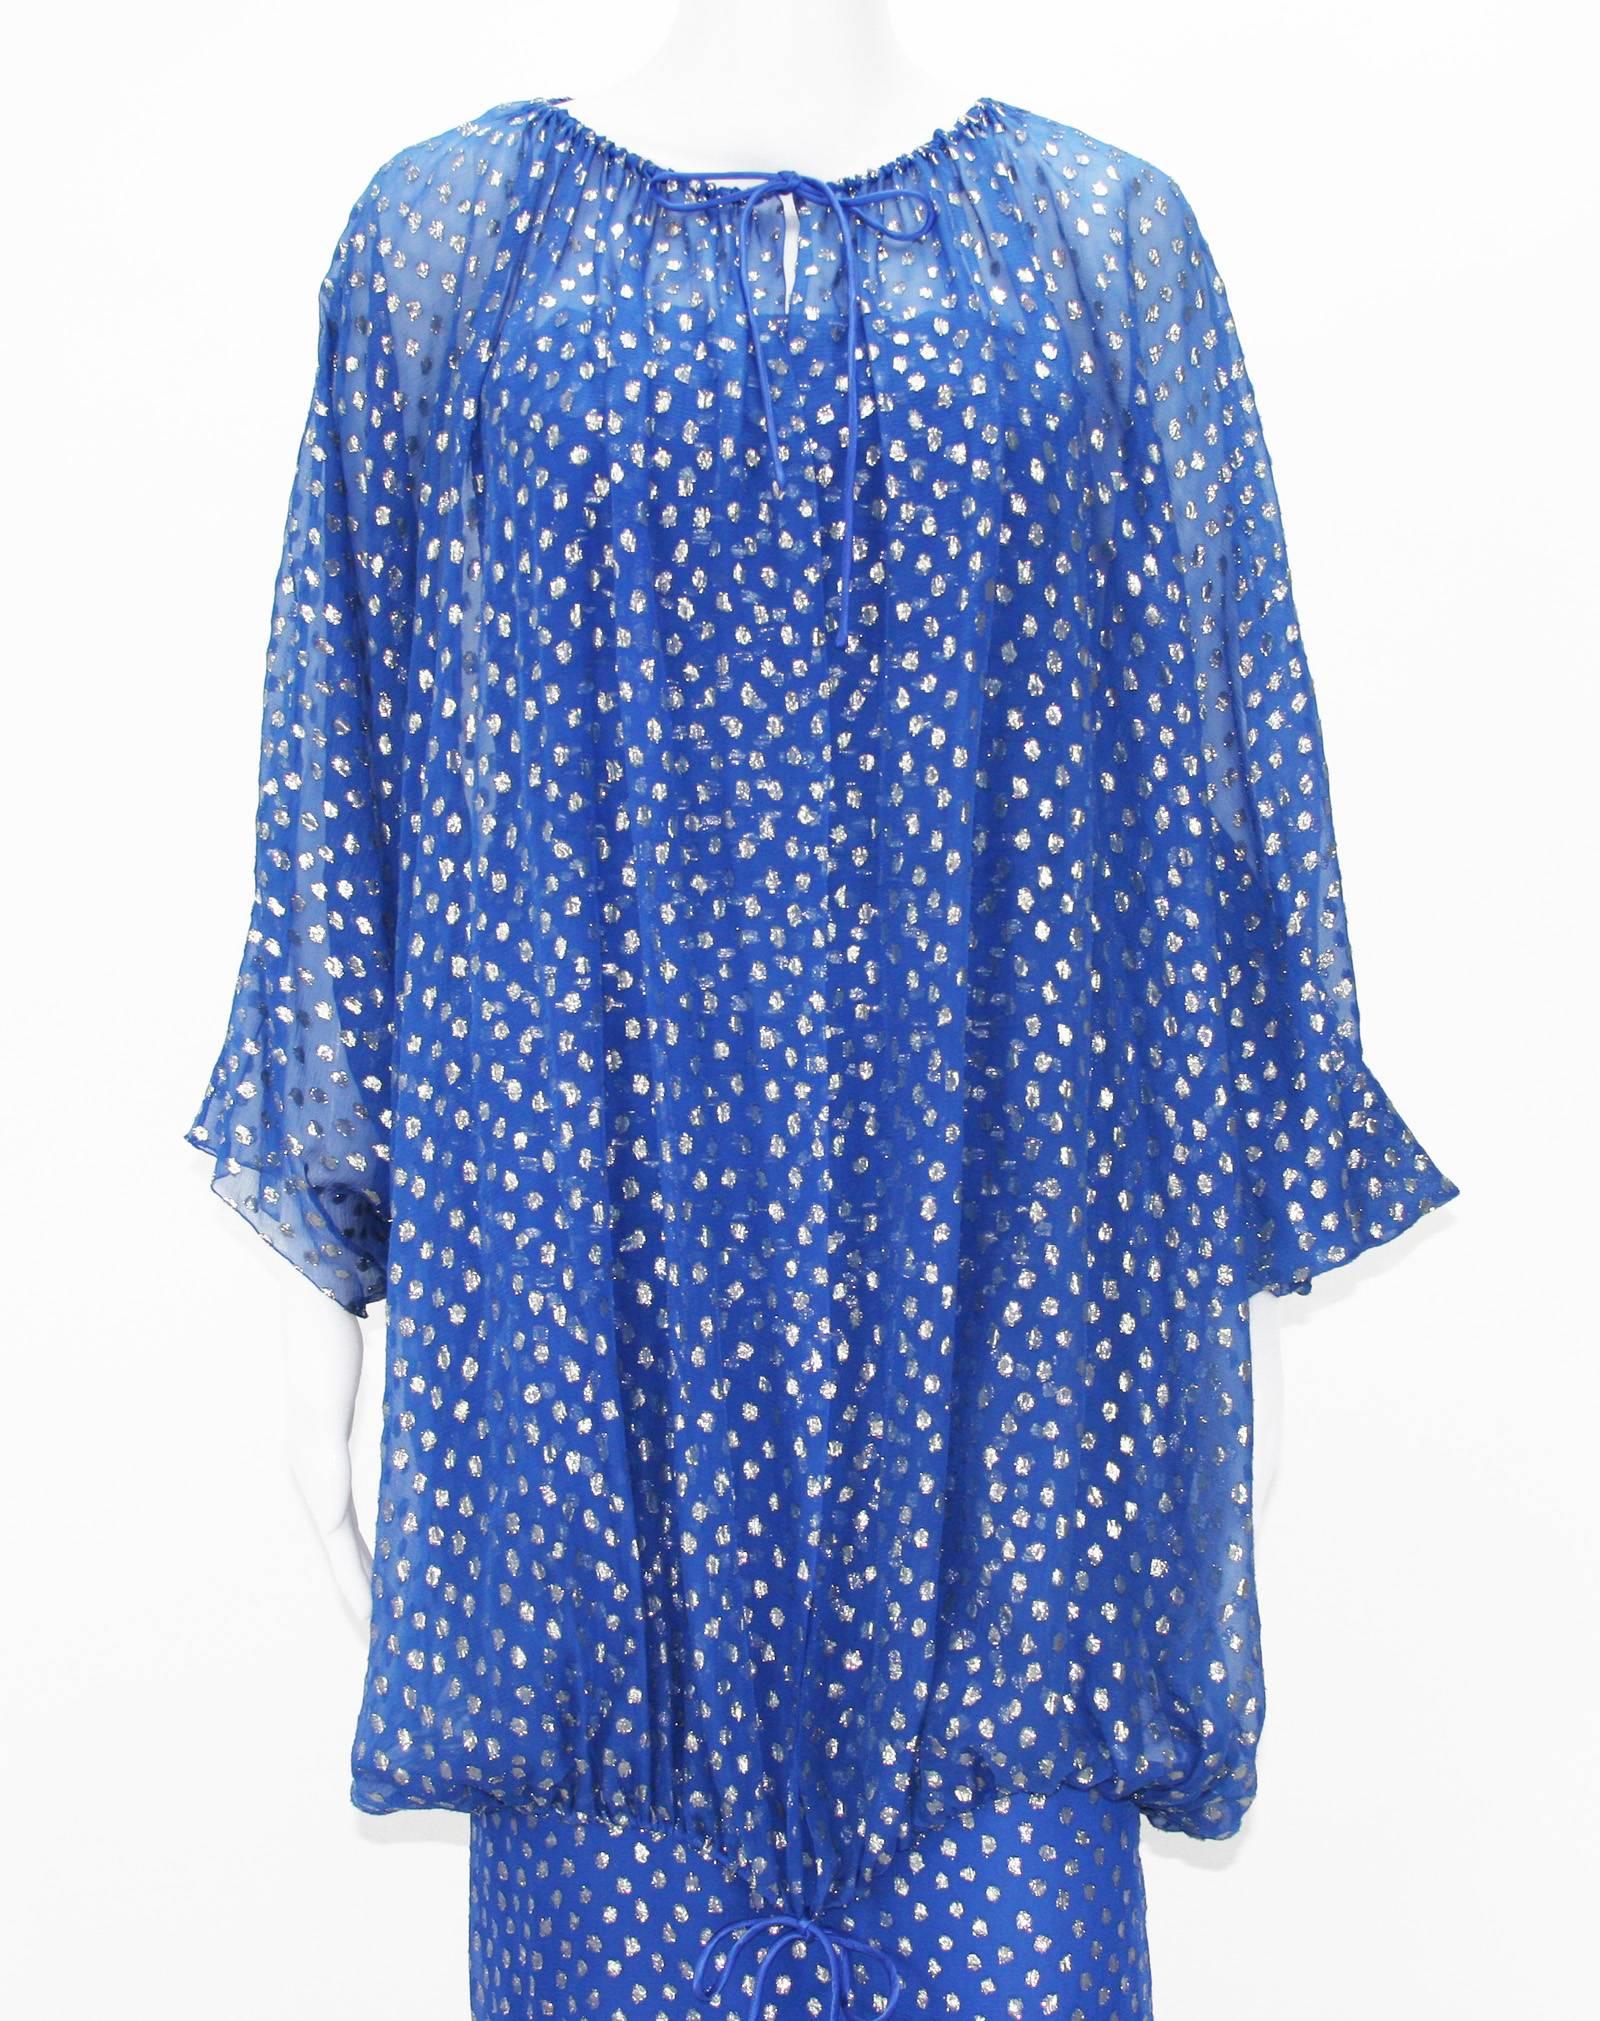 Christian Dior Paris F/W 1976 Numbered Polka Dot Blue Sheer Dress Set 6